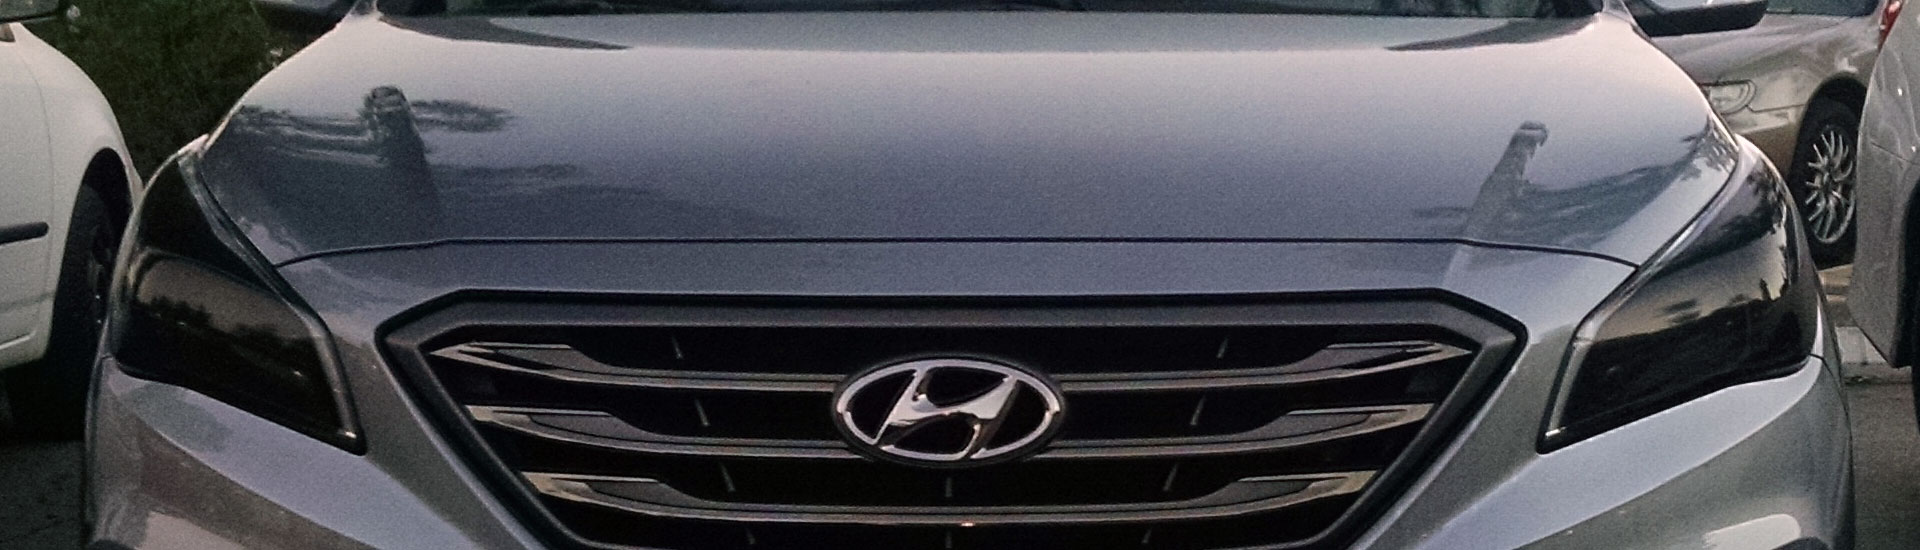 Hyundai Sonata Headlight Tint Covers